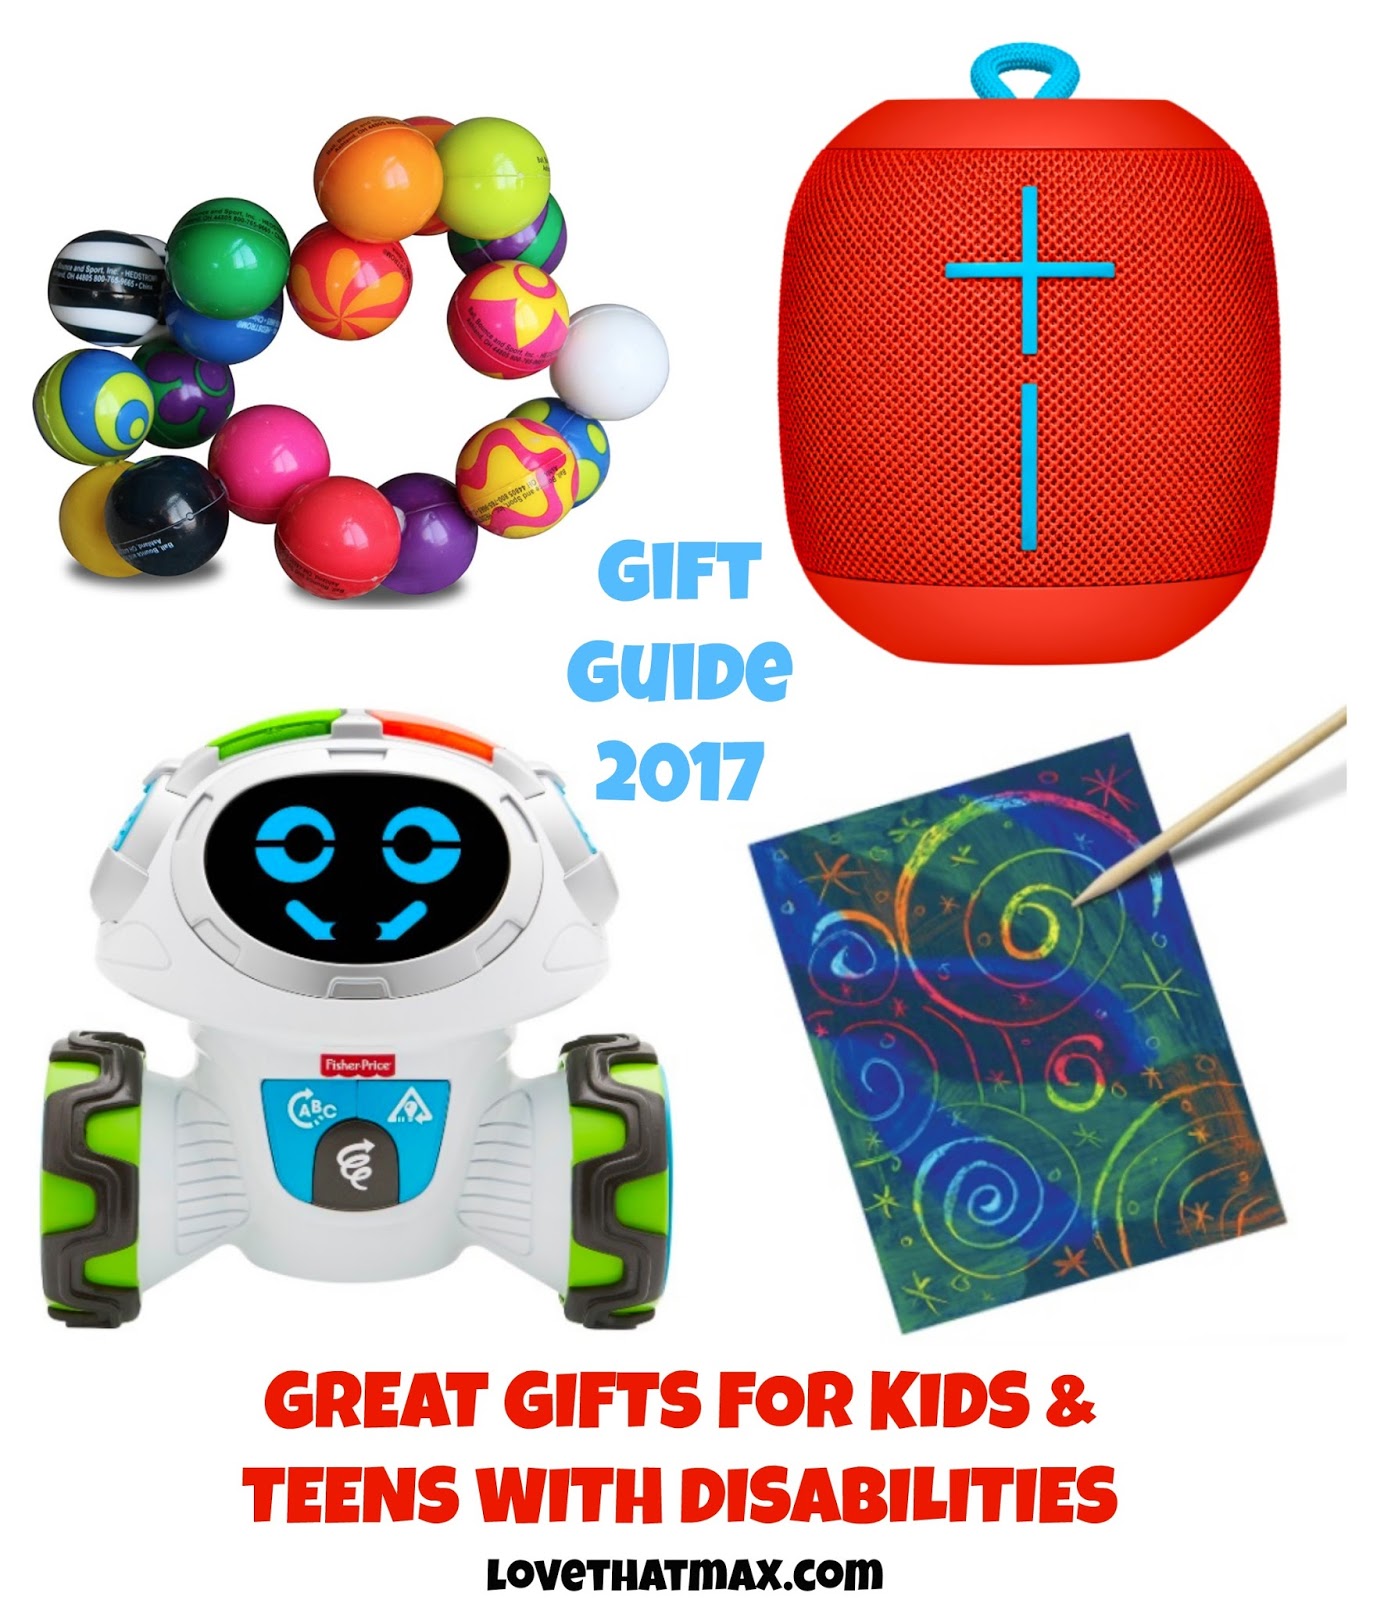 https://blogger.googleusercontent.com/img/b/R29vZ2xl/AVvXsEgG691S7ua-p7FJWR2HJKKWBMh6l23bQZlgv9ew7ftZlF53g88vlwBQ7FBaFVtXtgbJQVaIDIintYi8KVtZq3CoQyENicMtxBbt8zWLDYGXeFitYokl2SOKuDalsPNxakYfxldJYCIcdQc/s1600/great-gifts-toys-kids-teens-disabilities.jpg